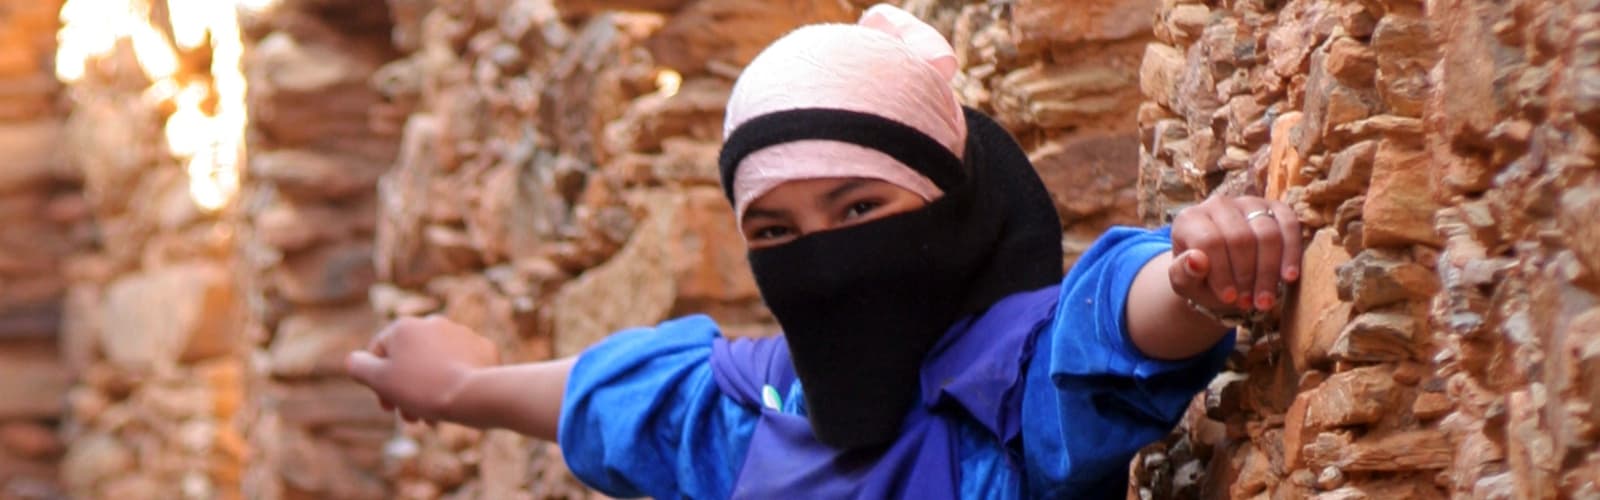 Circuit 4x4 Maroc, jeune fille dans un agadir